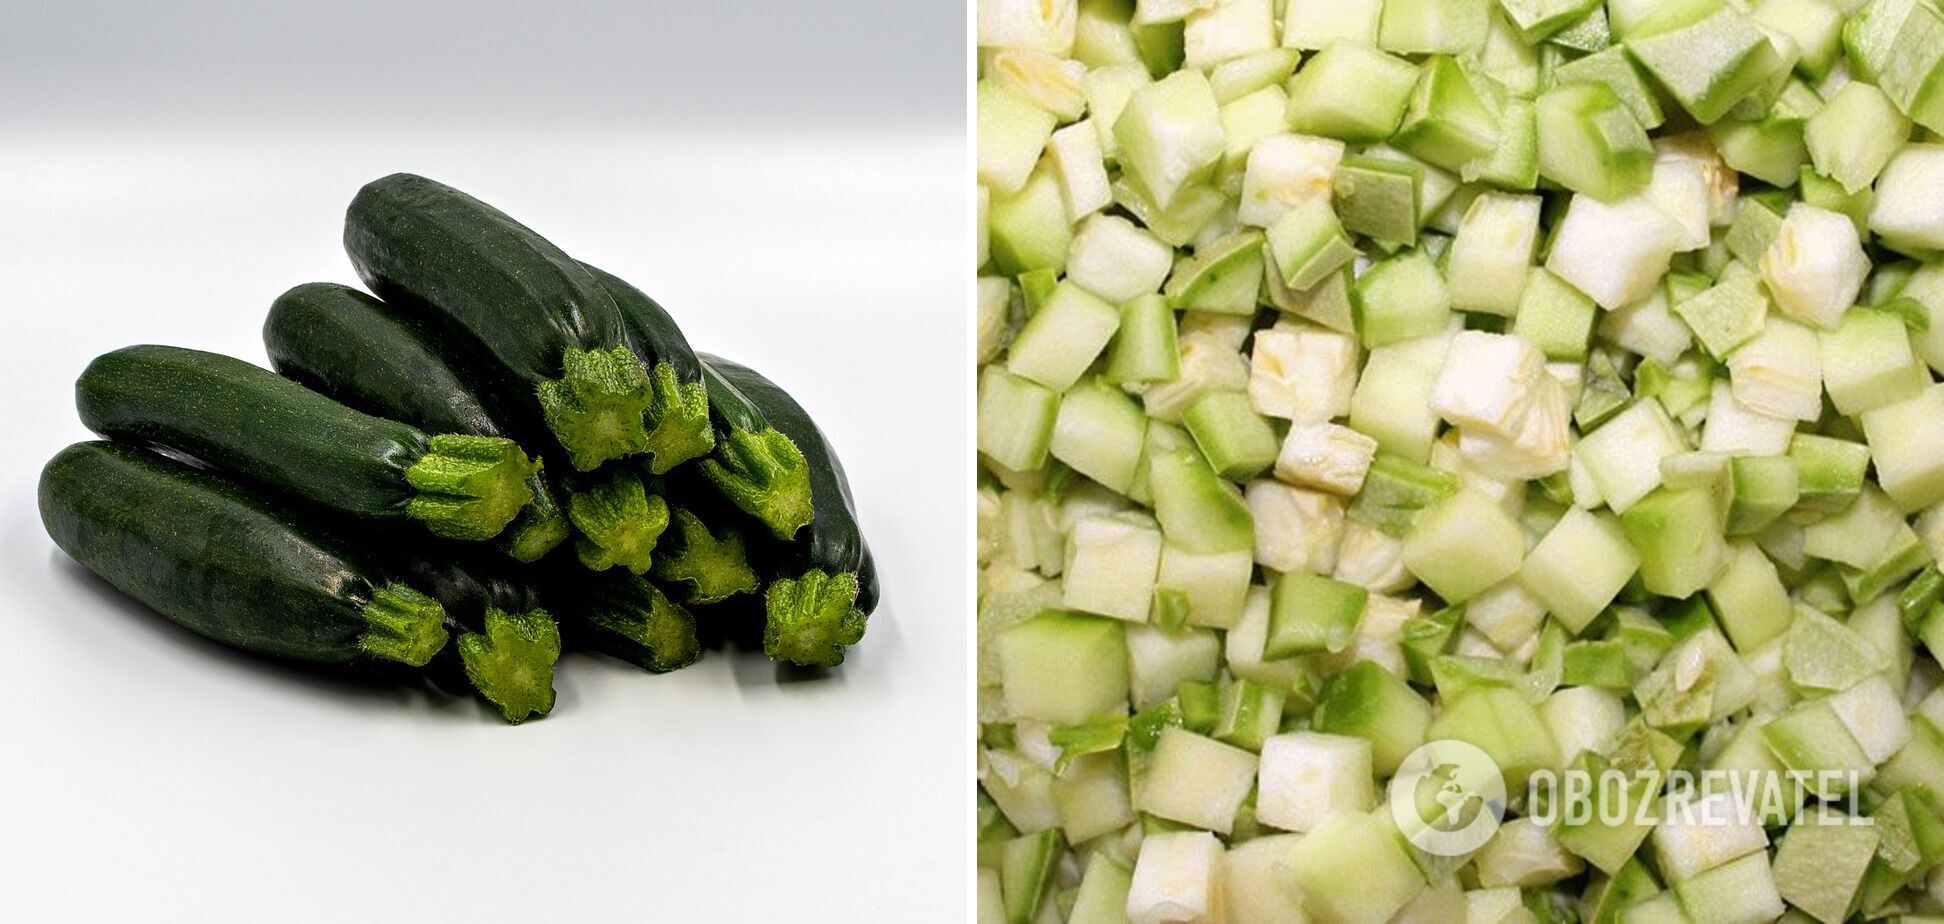 How to properly freeze zucchini